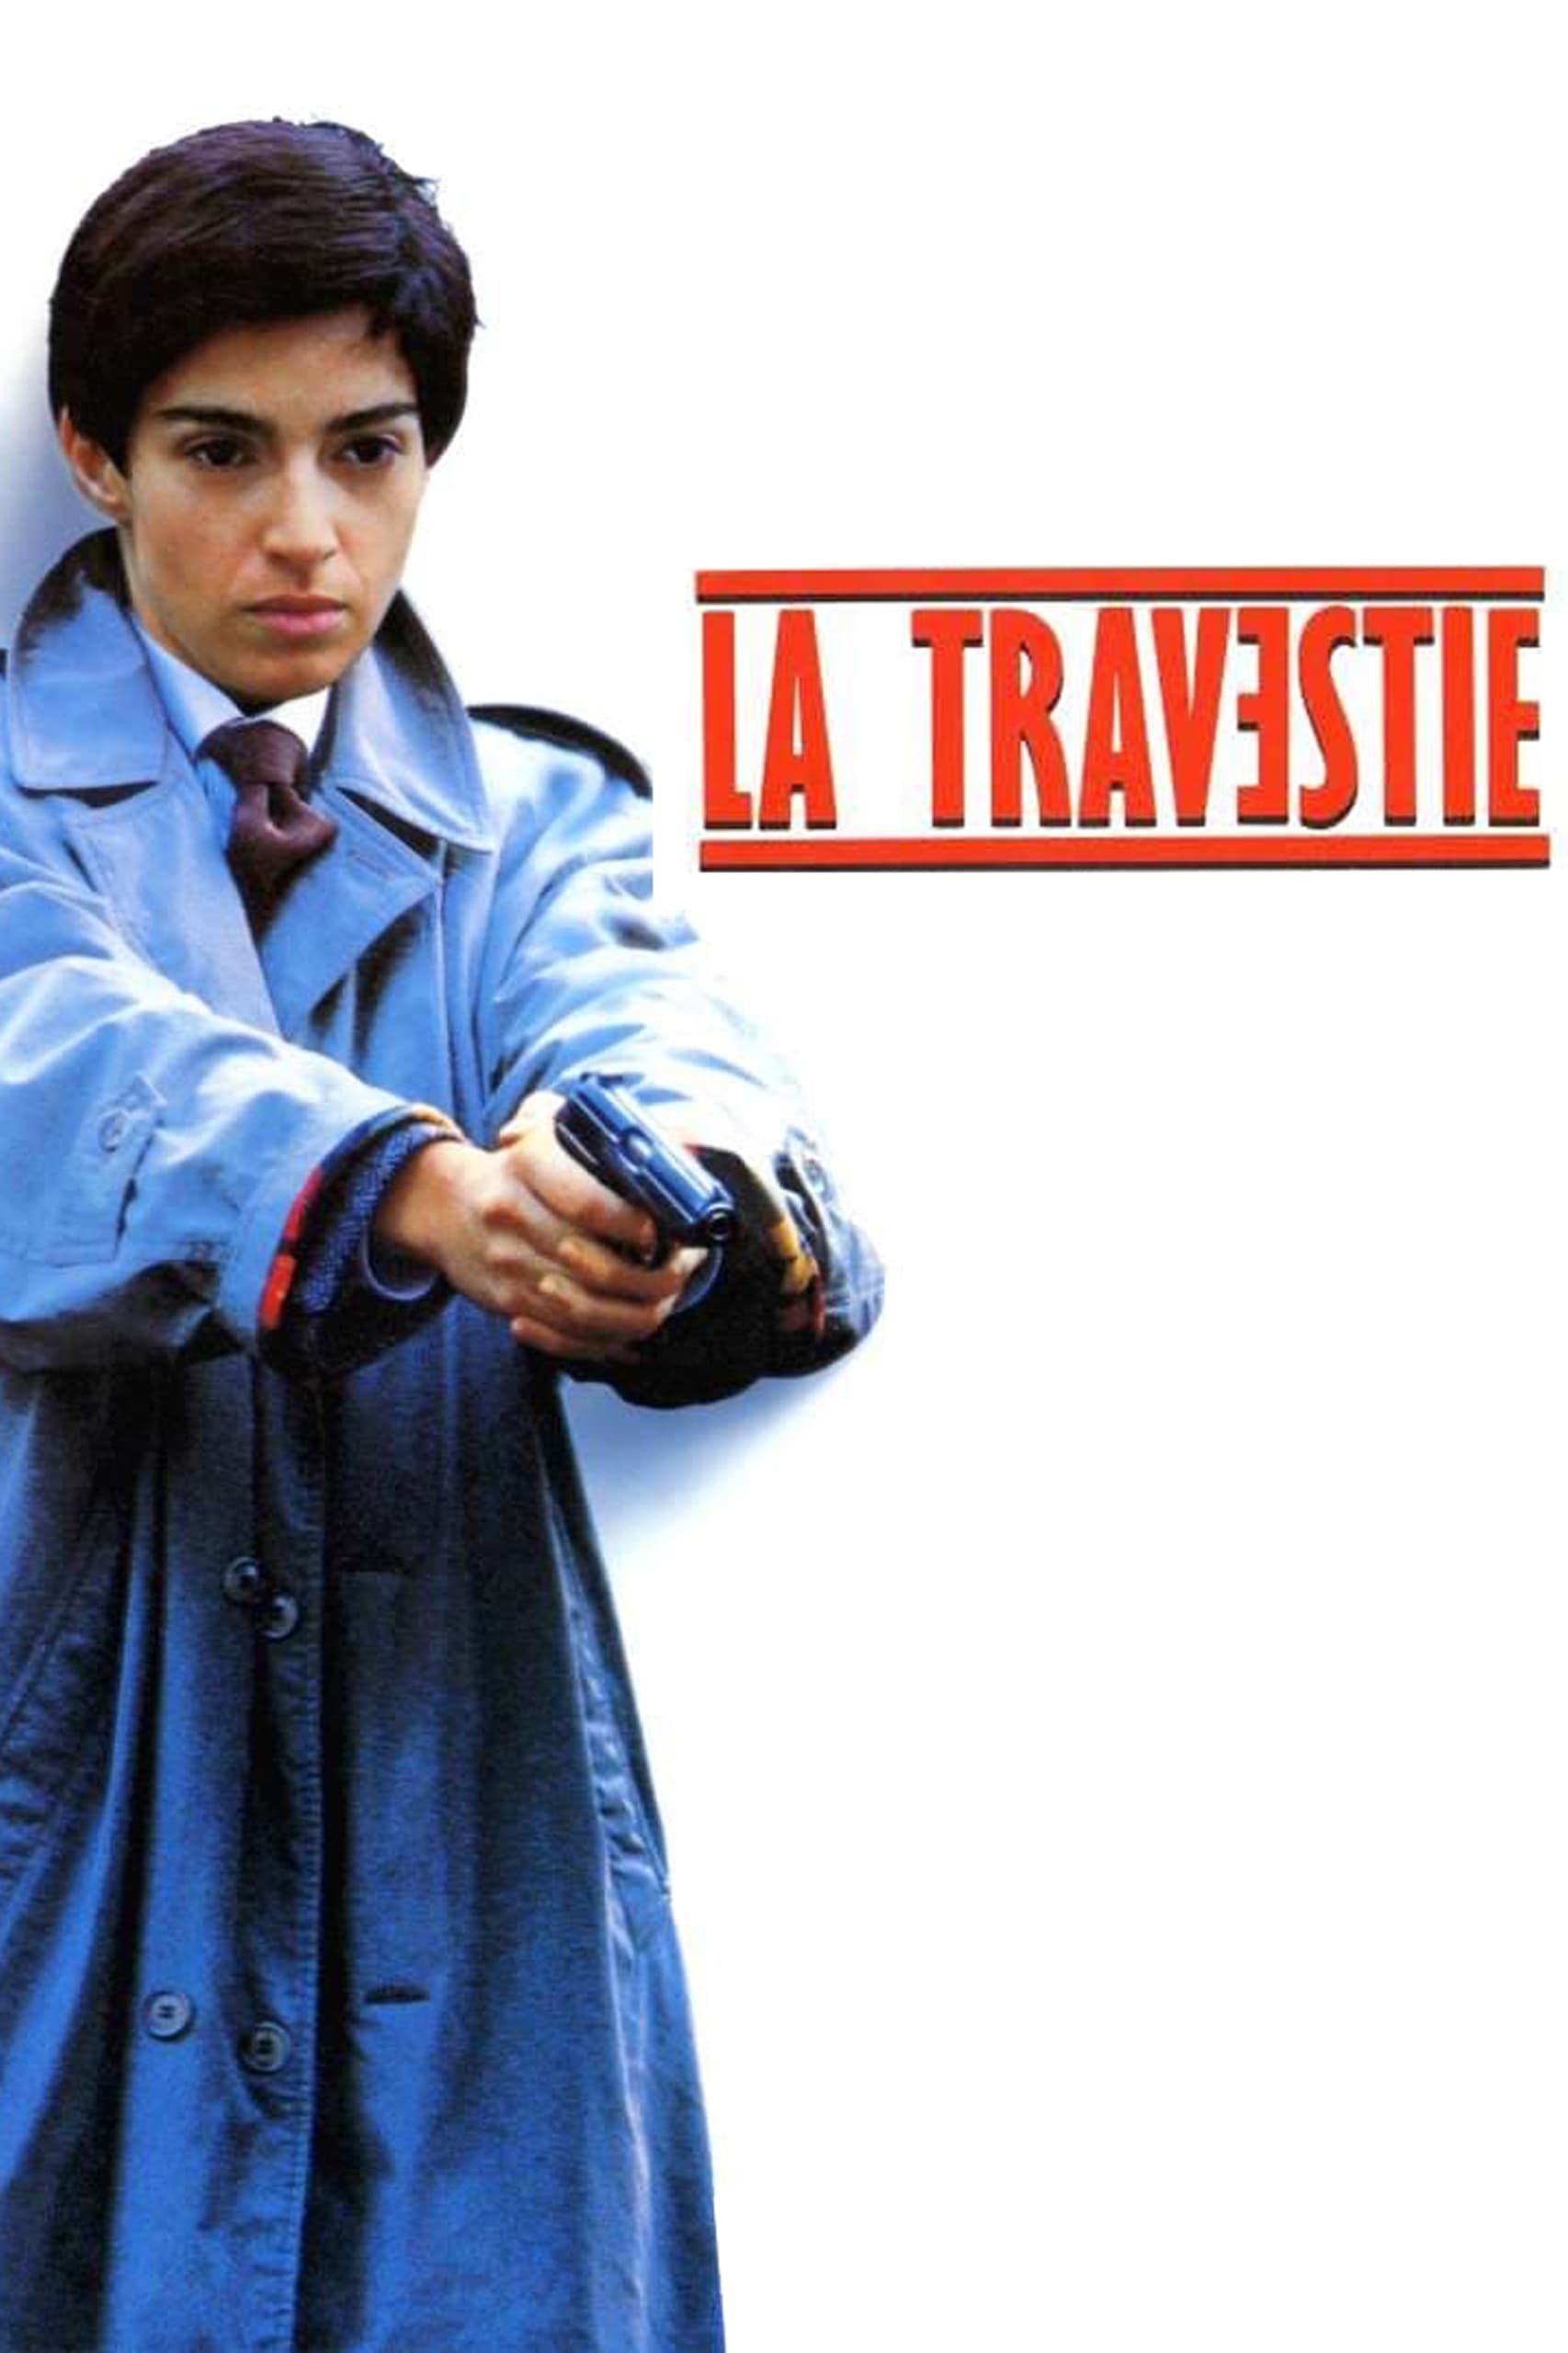 La Travestie (1988)